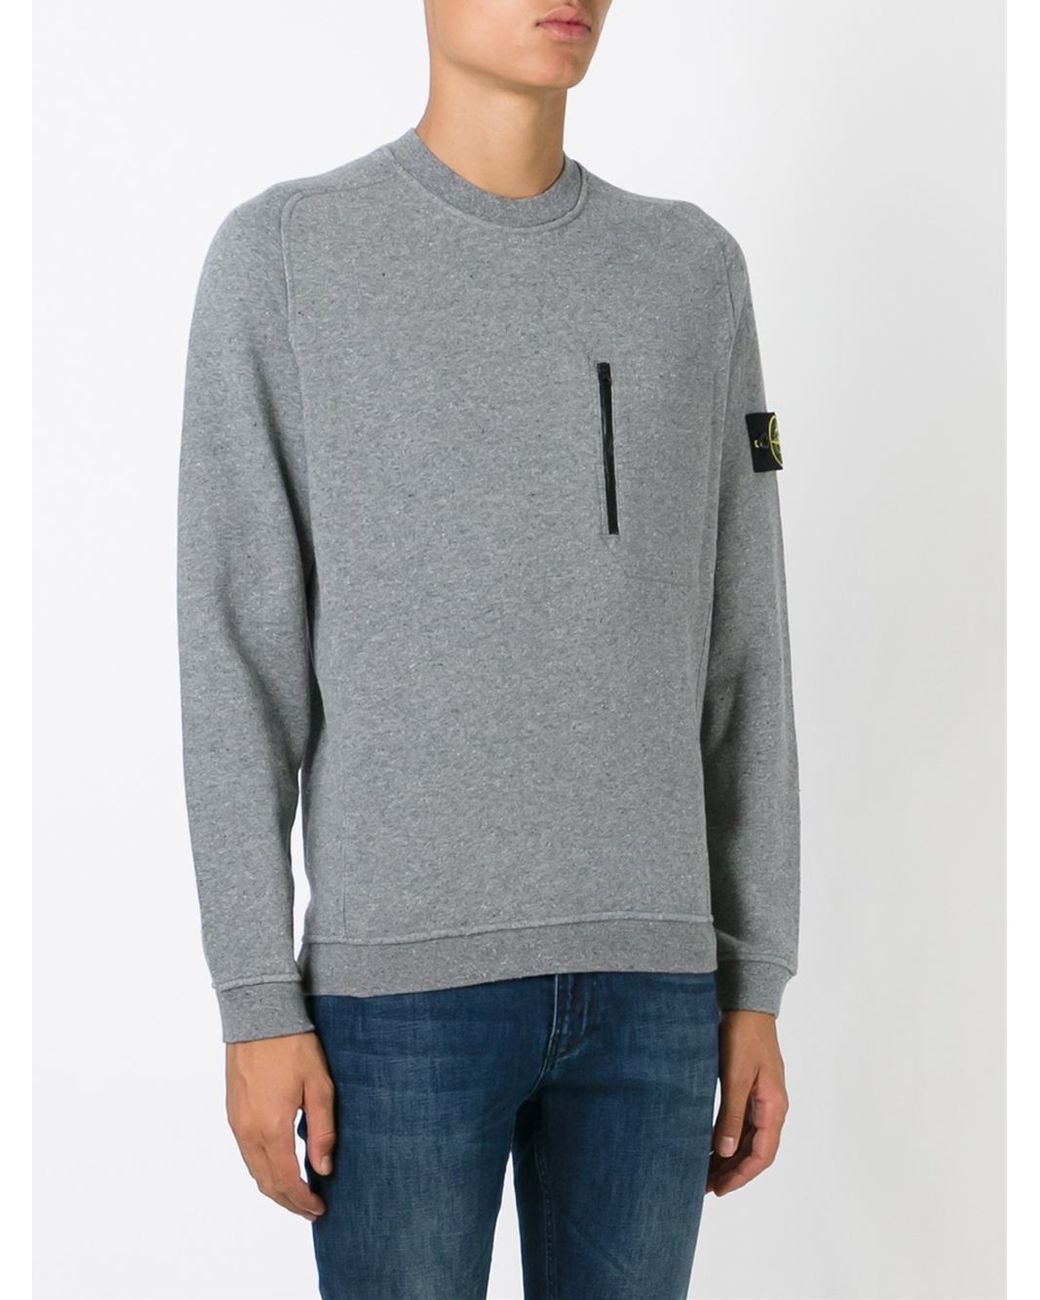 Stone Island Zip Chest Pocket Sweatshirt in Gray for Men | Lyst